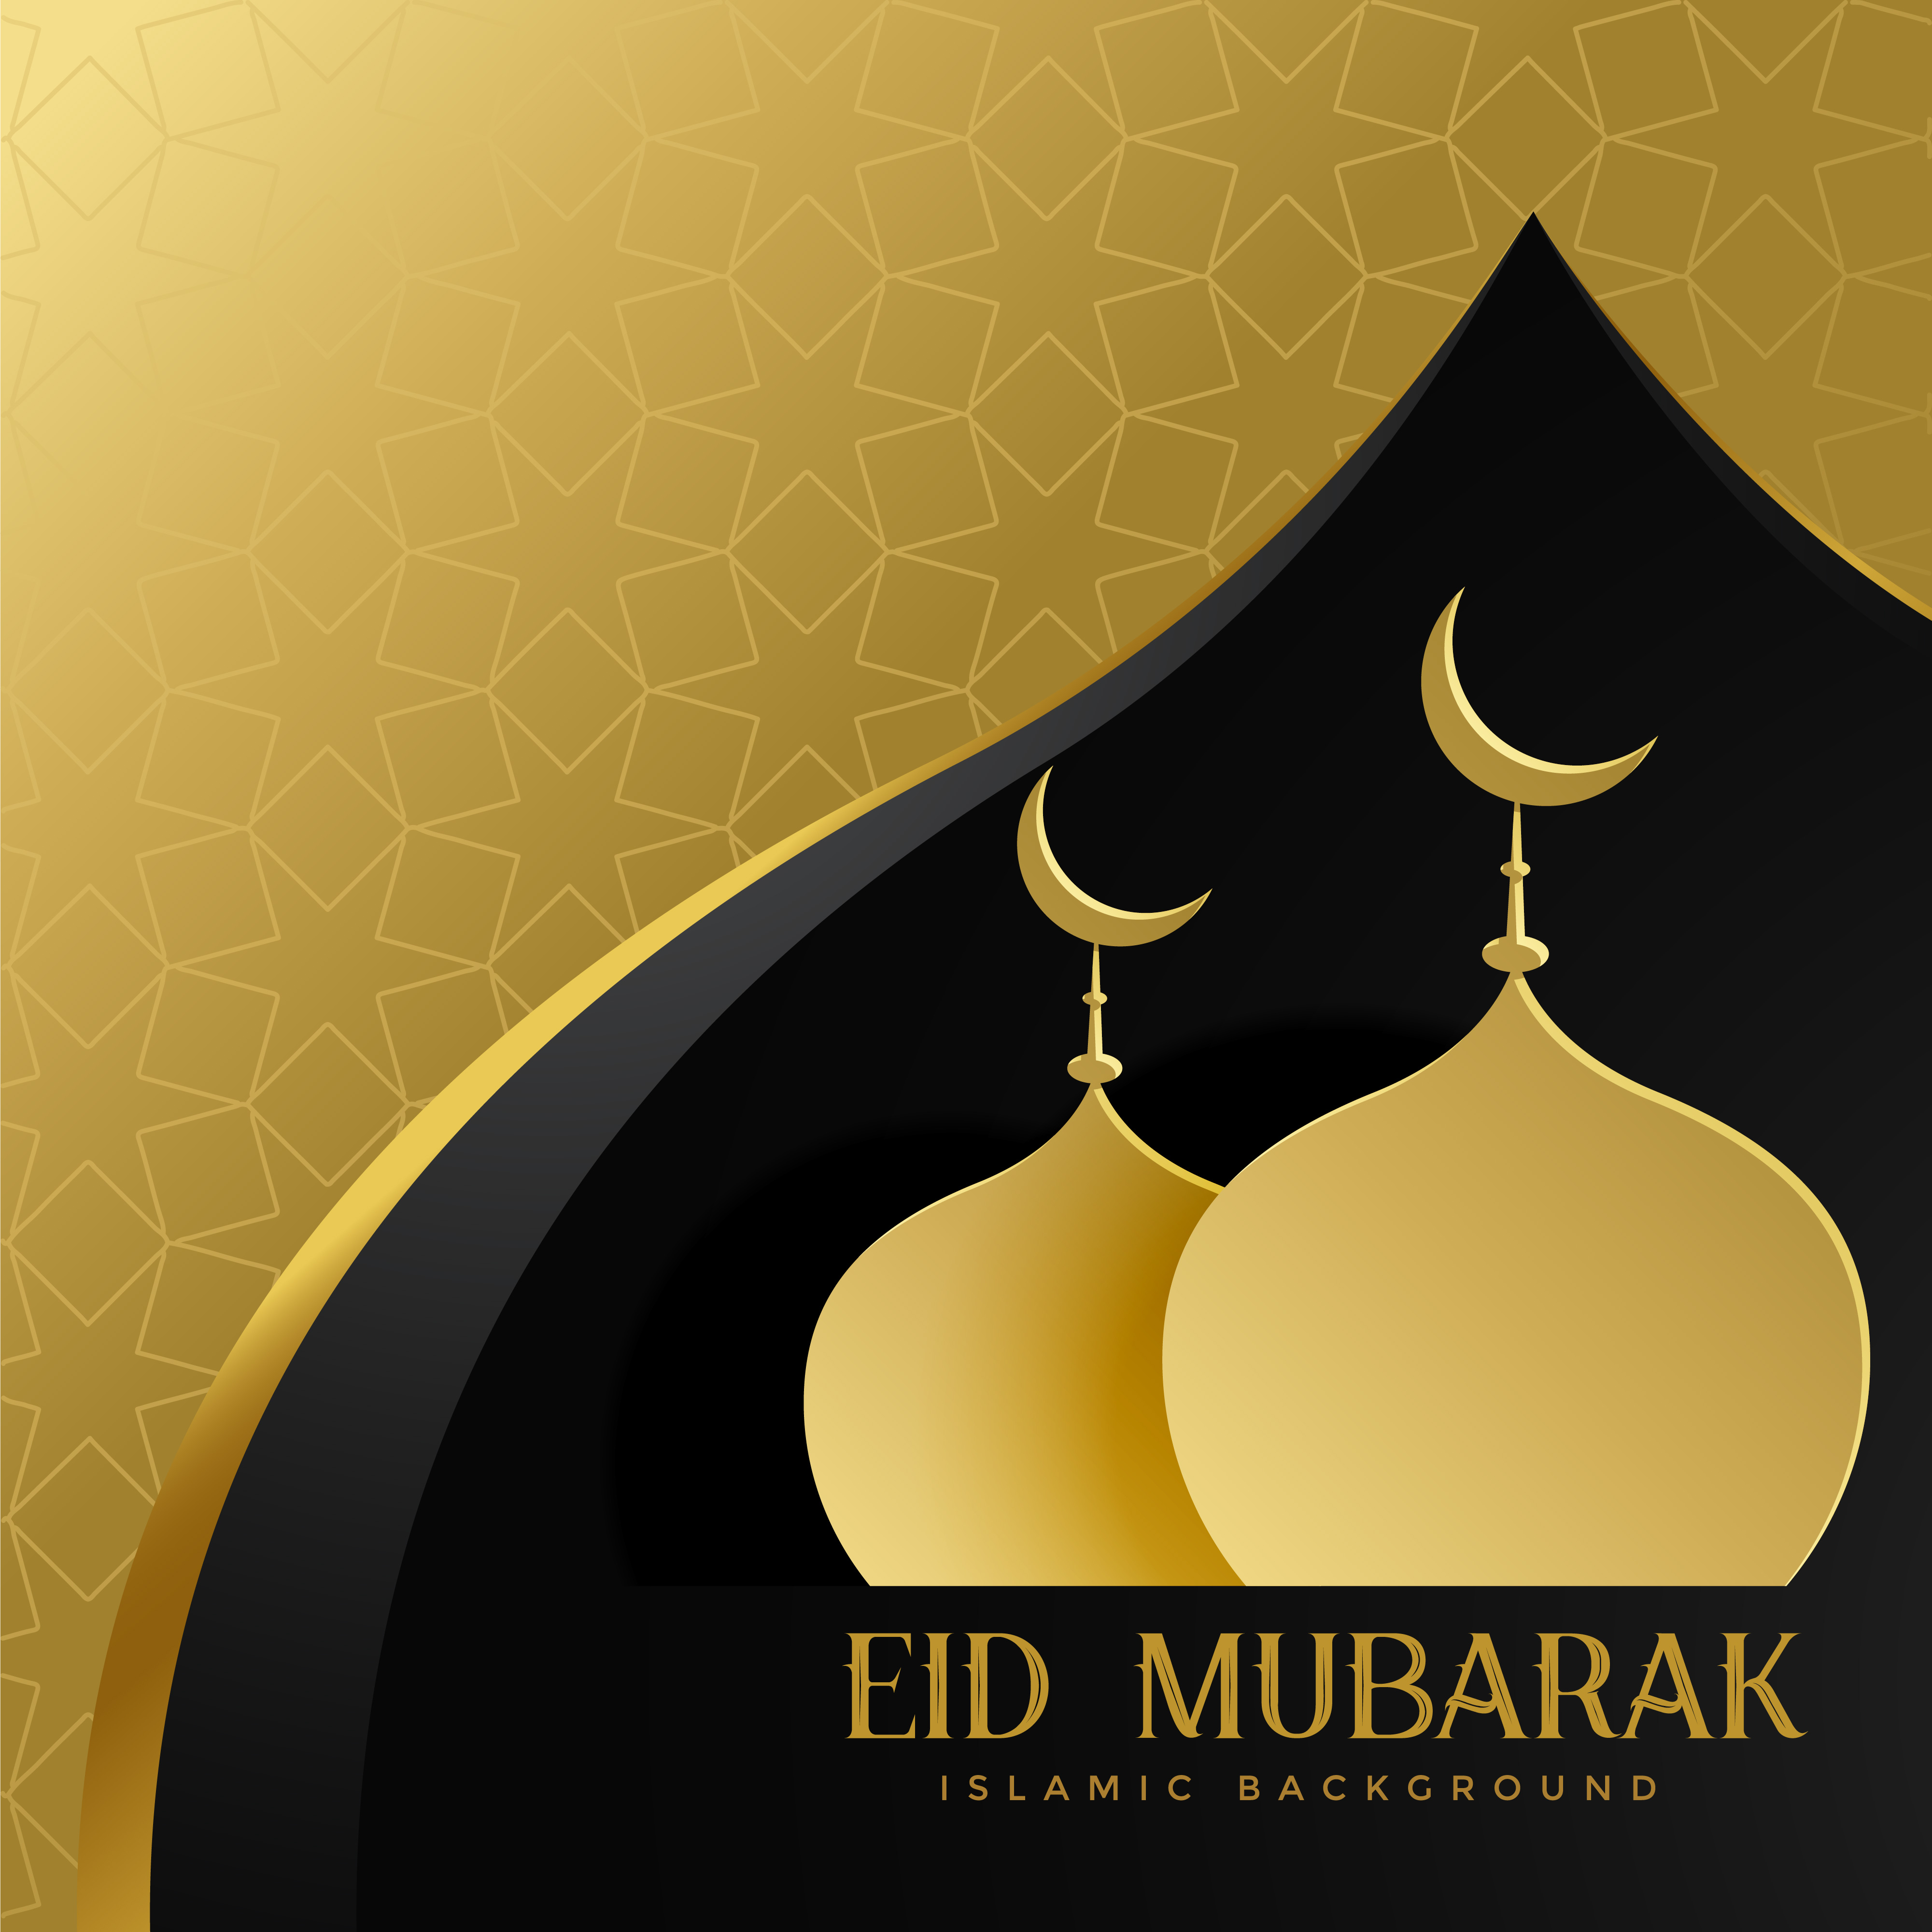 Eid Mubarak Creative Greeting With Mosque Top Download Free Vector